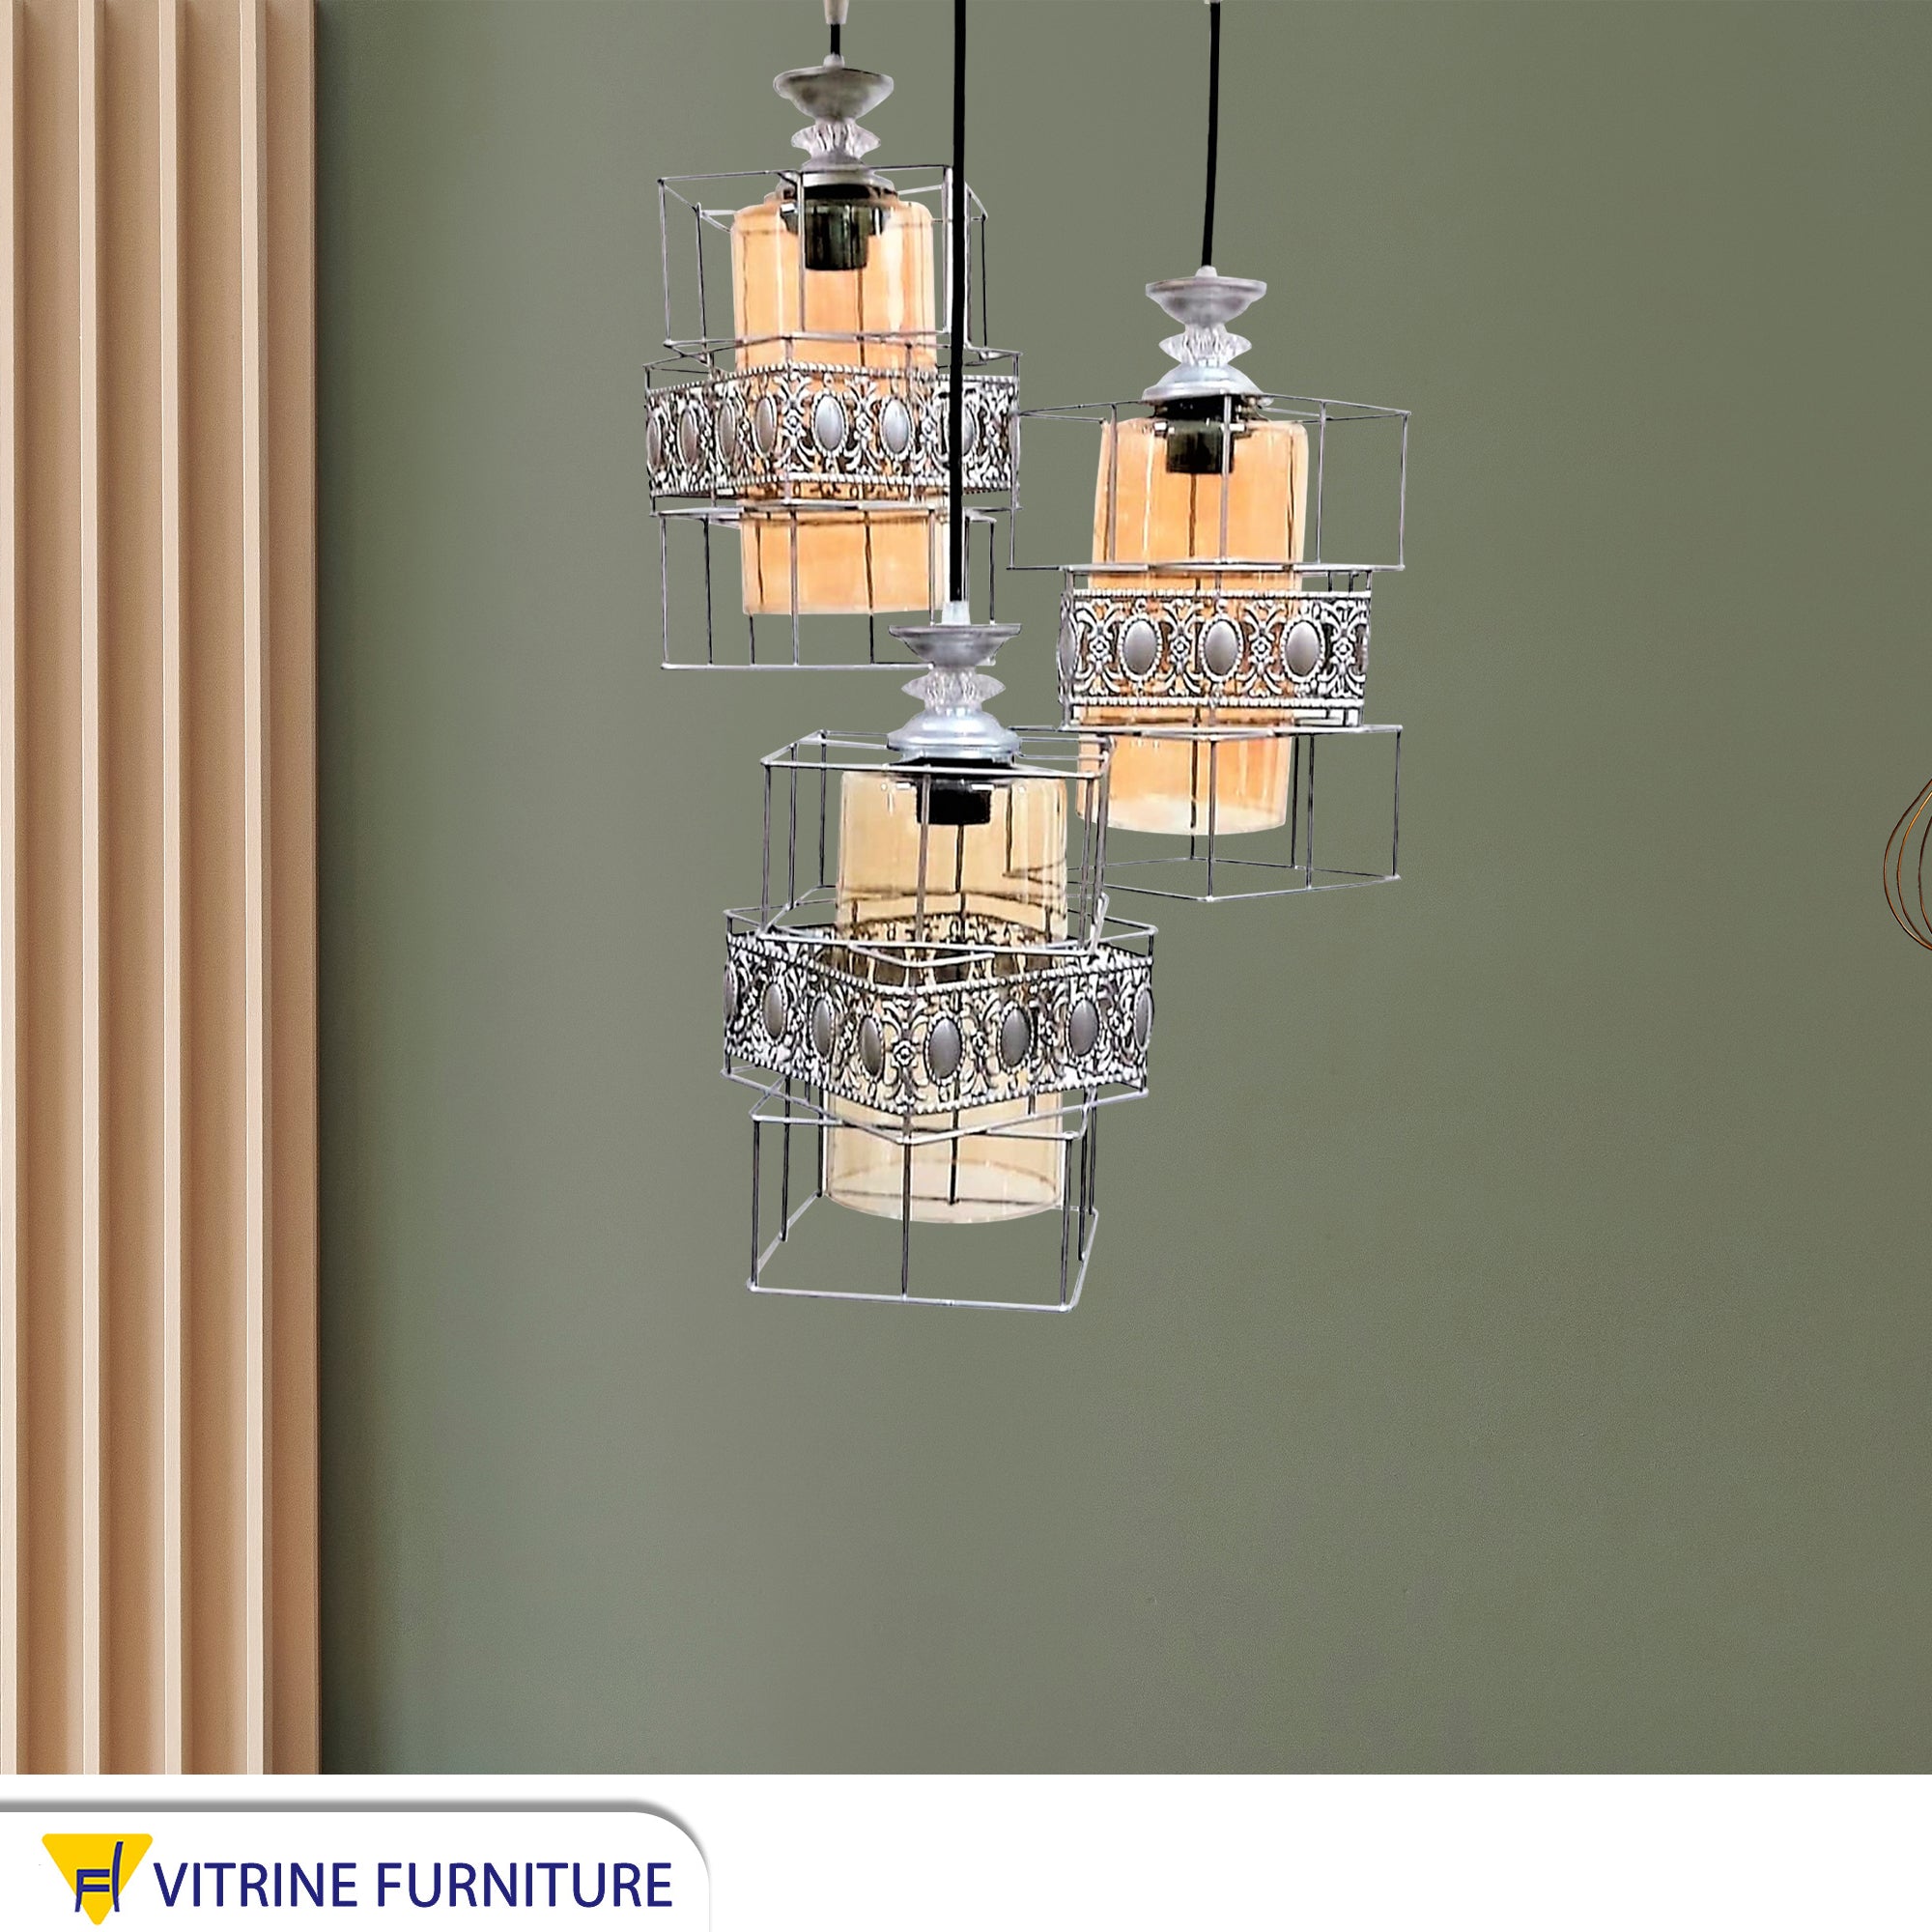 Triple ceiling chandelier with elegant design